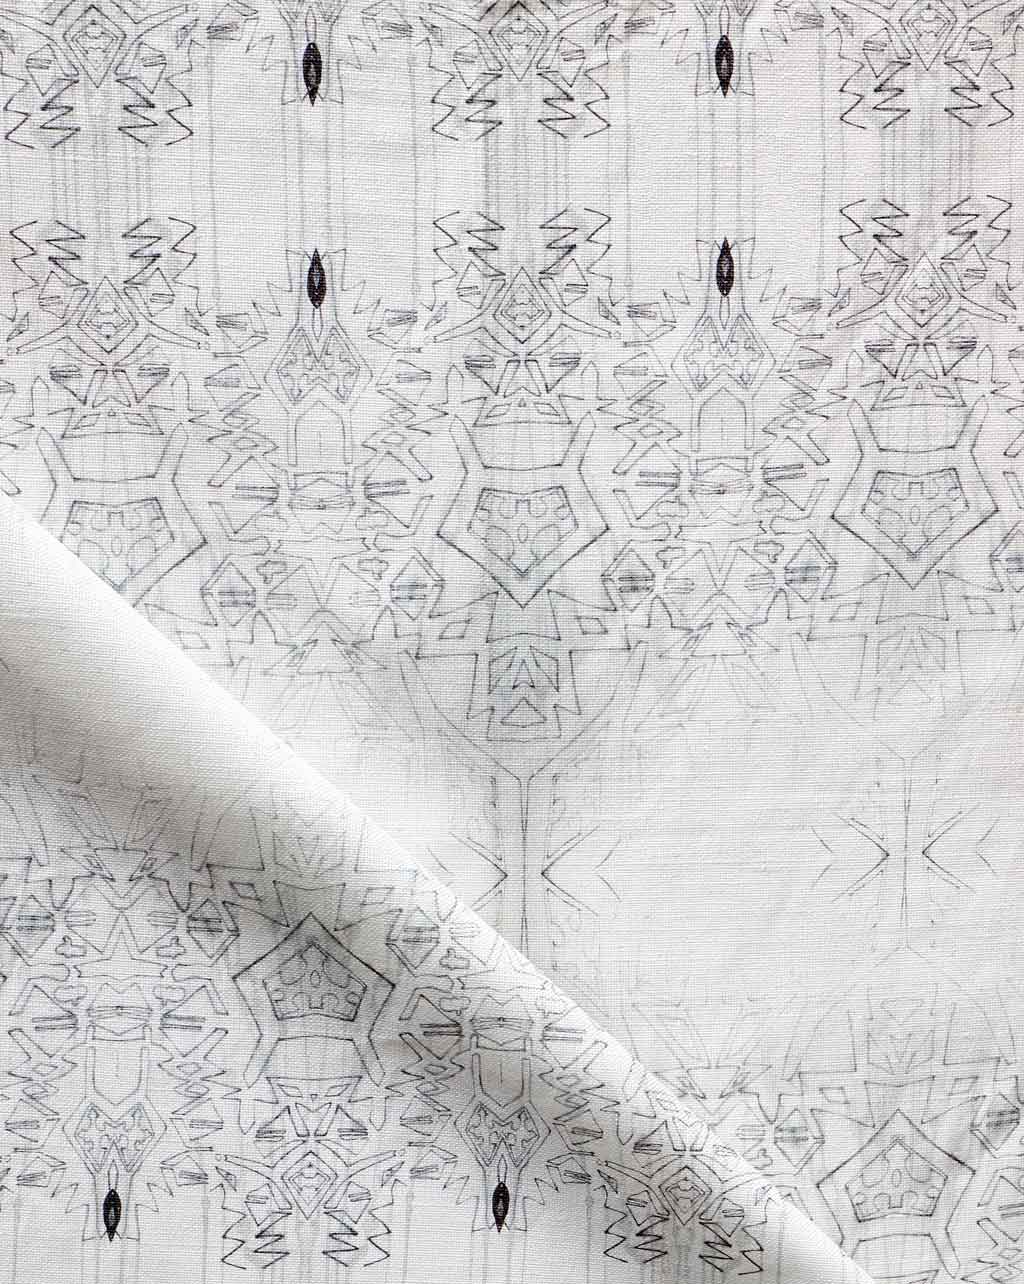 Akimbo 1 Fabric Greyscale: A monochrome fabric with a geometric pattern on it